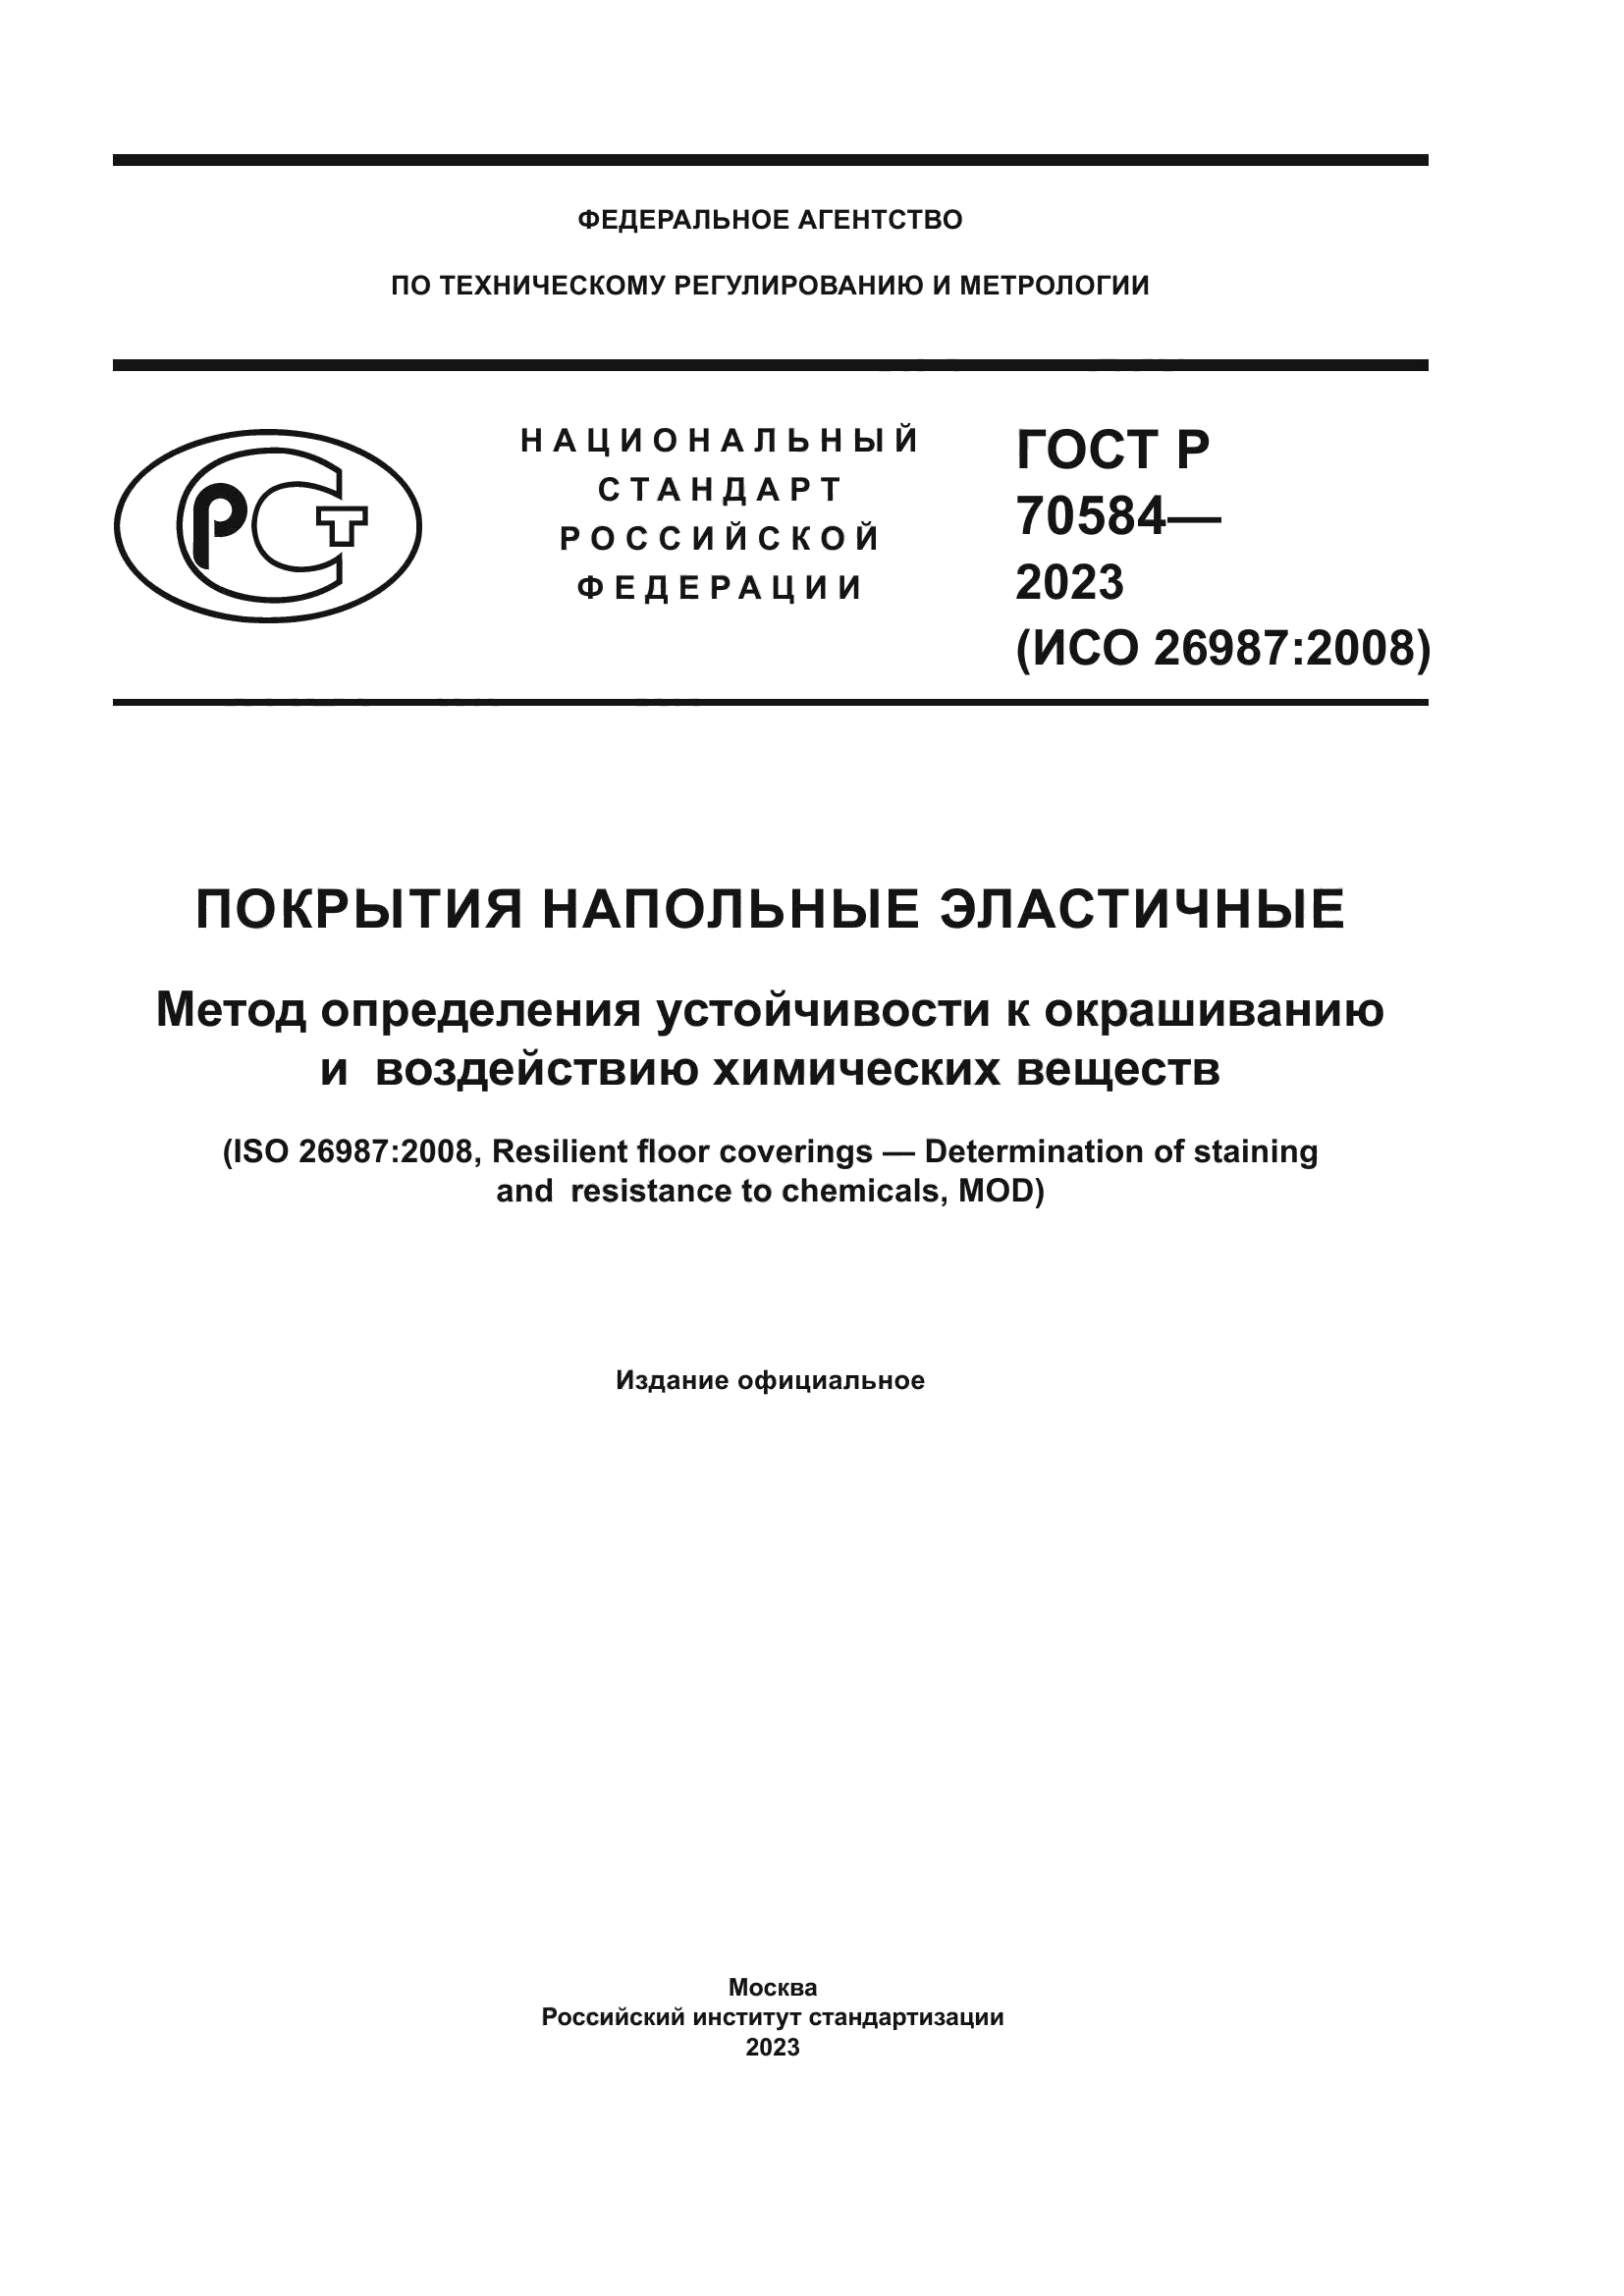 ГОСТ Р 70584-2023